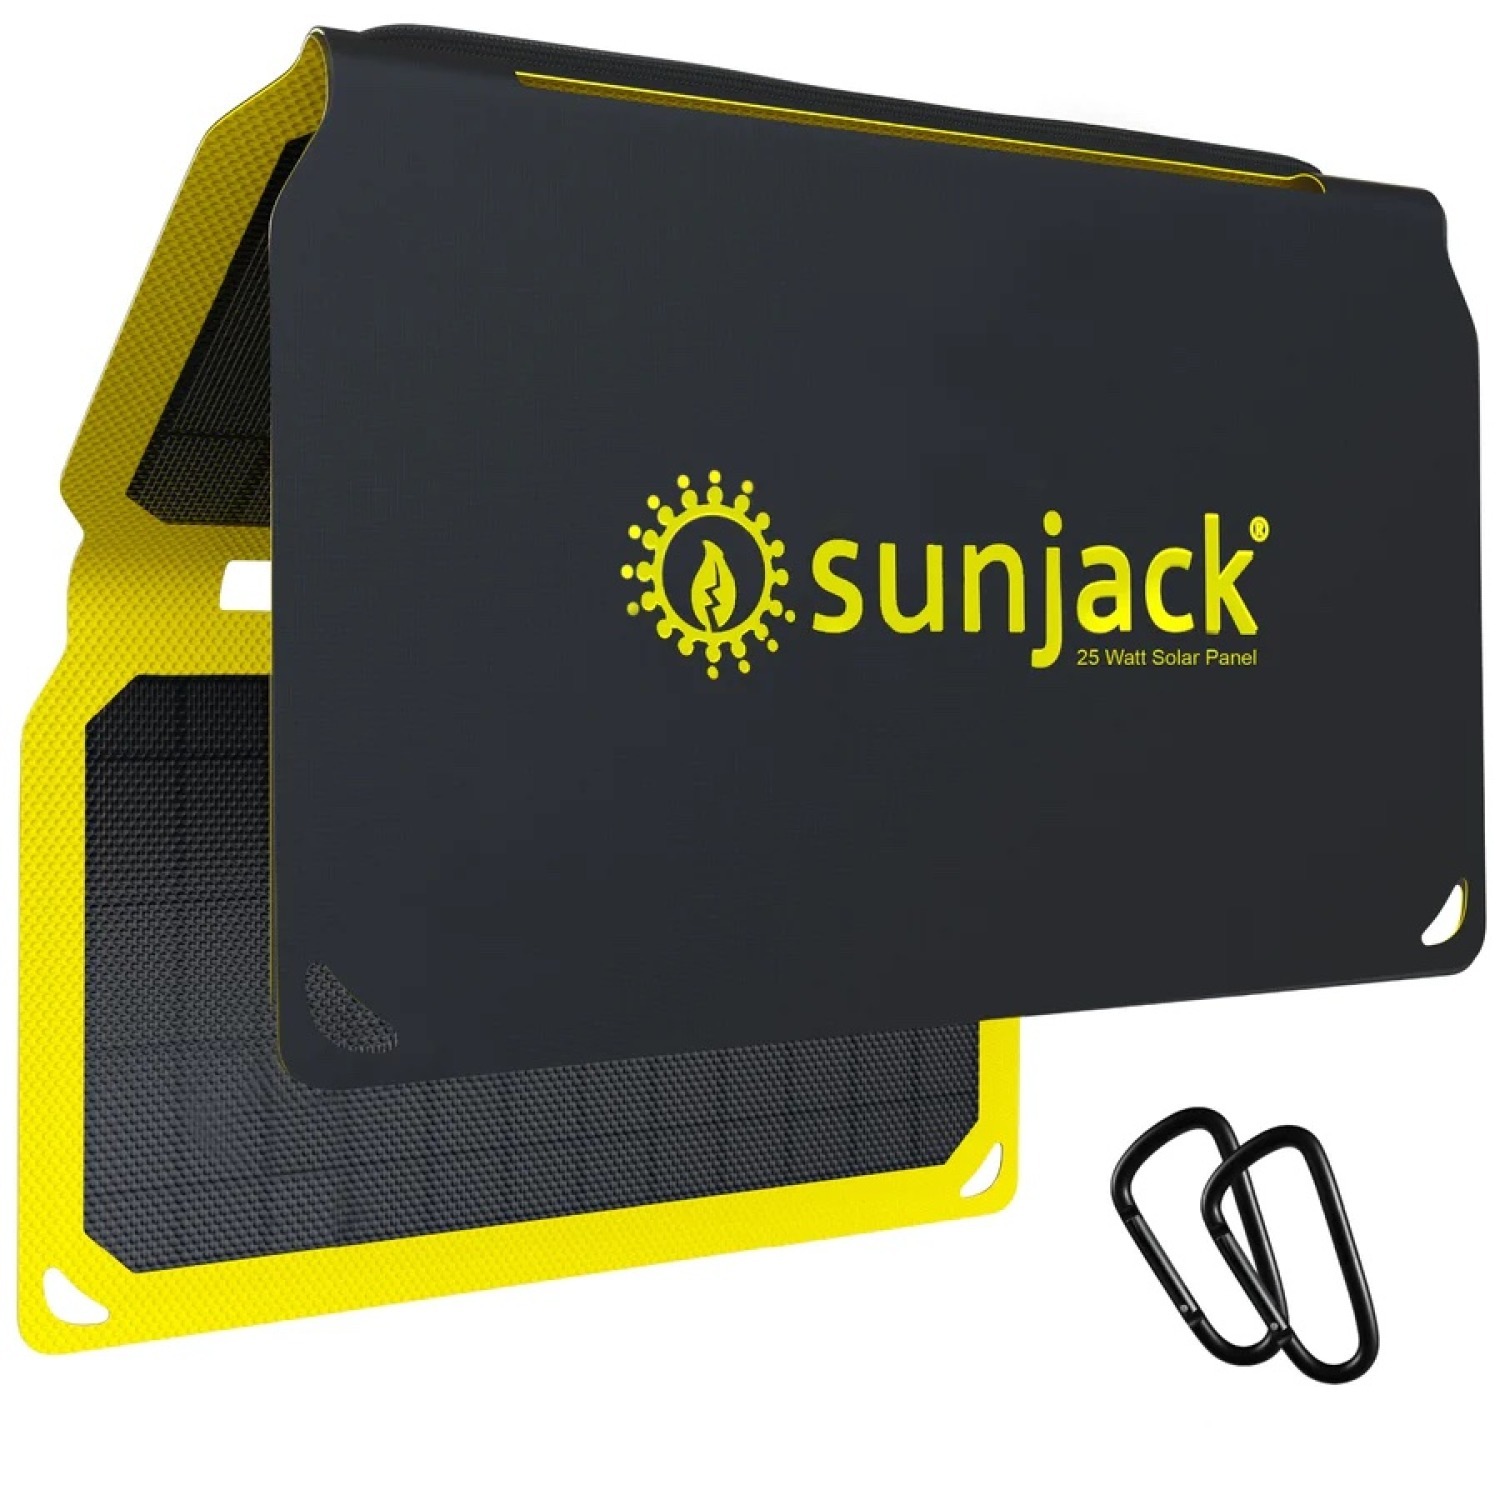 SunJack 15 Watt Foldable ETFE Monocrystalline Solar Panel Charger $44.96 or 25W $59.97 + Free Shipping